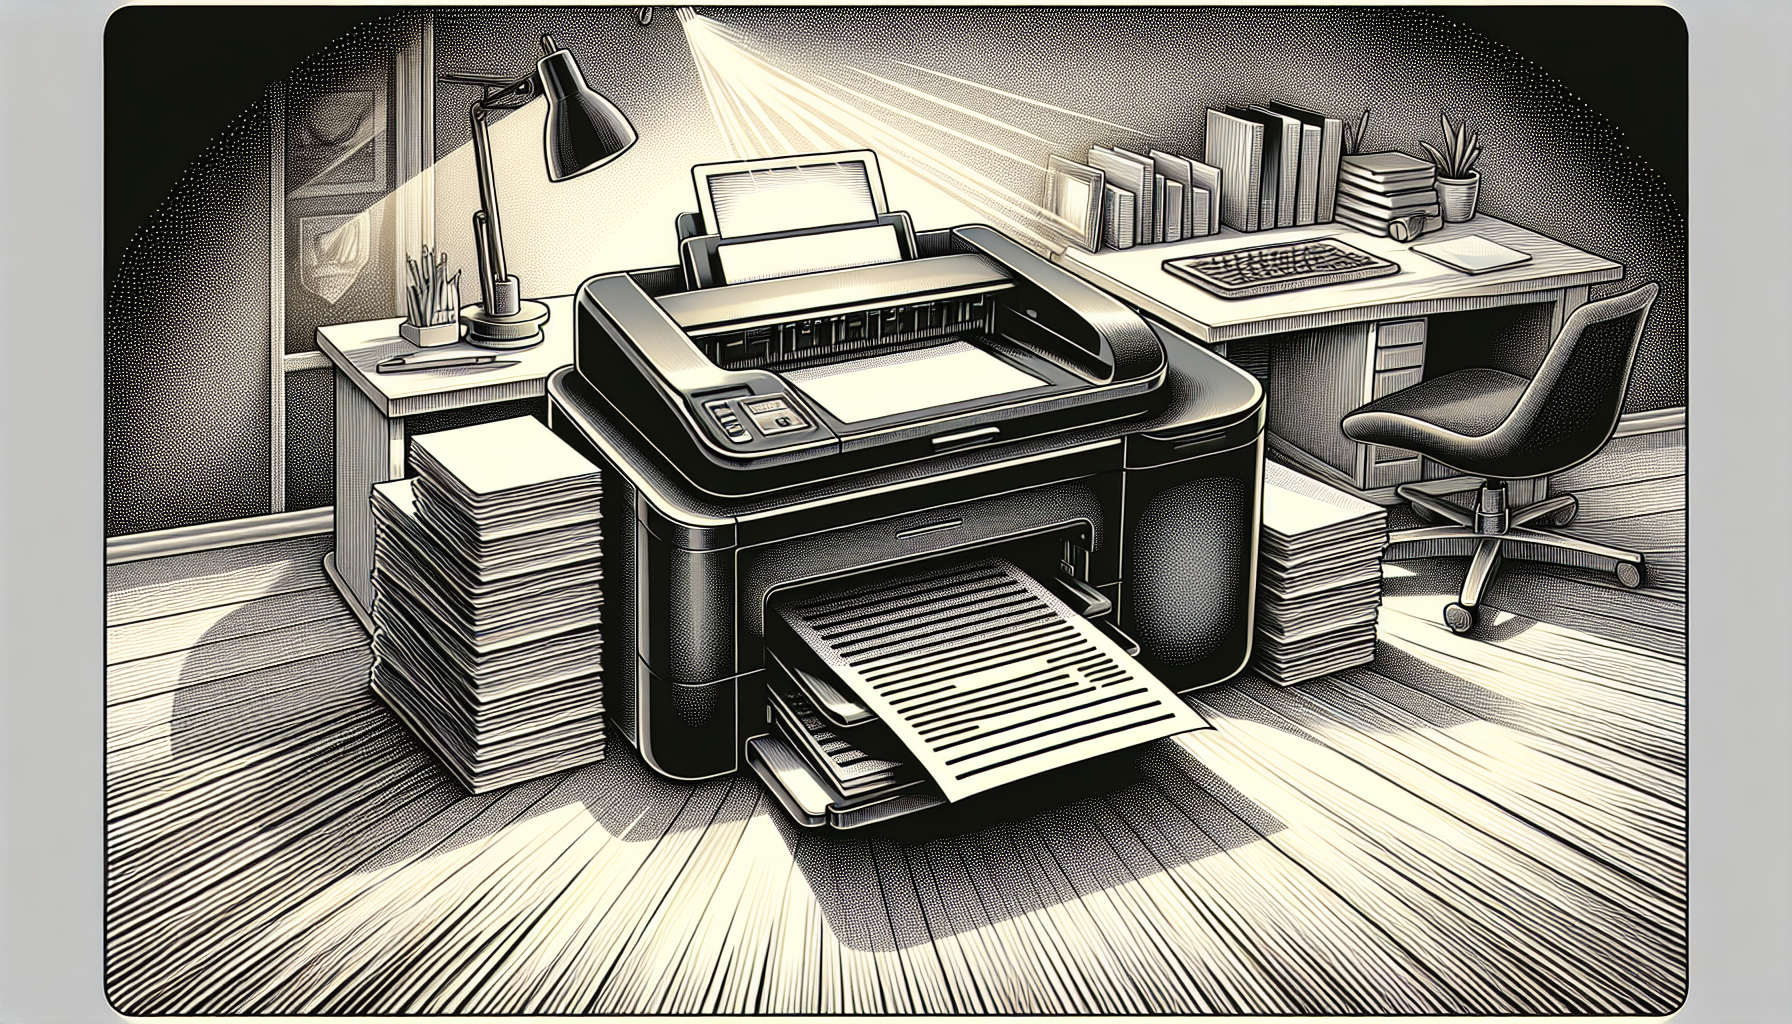 Black and white laserjet printer producing high-volume documents